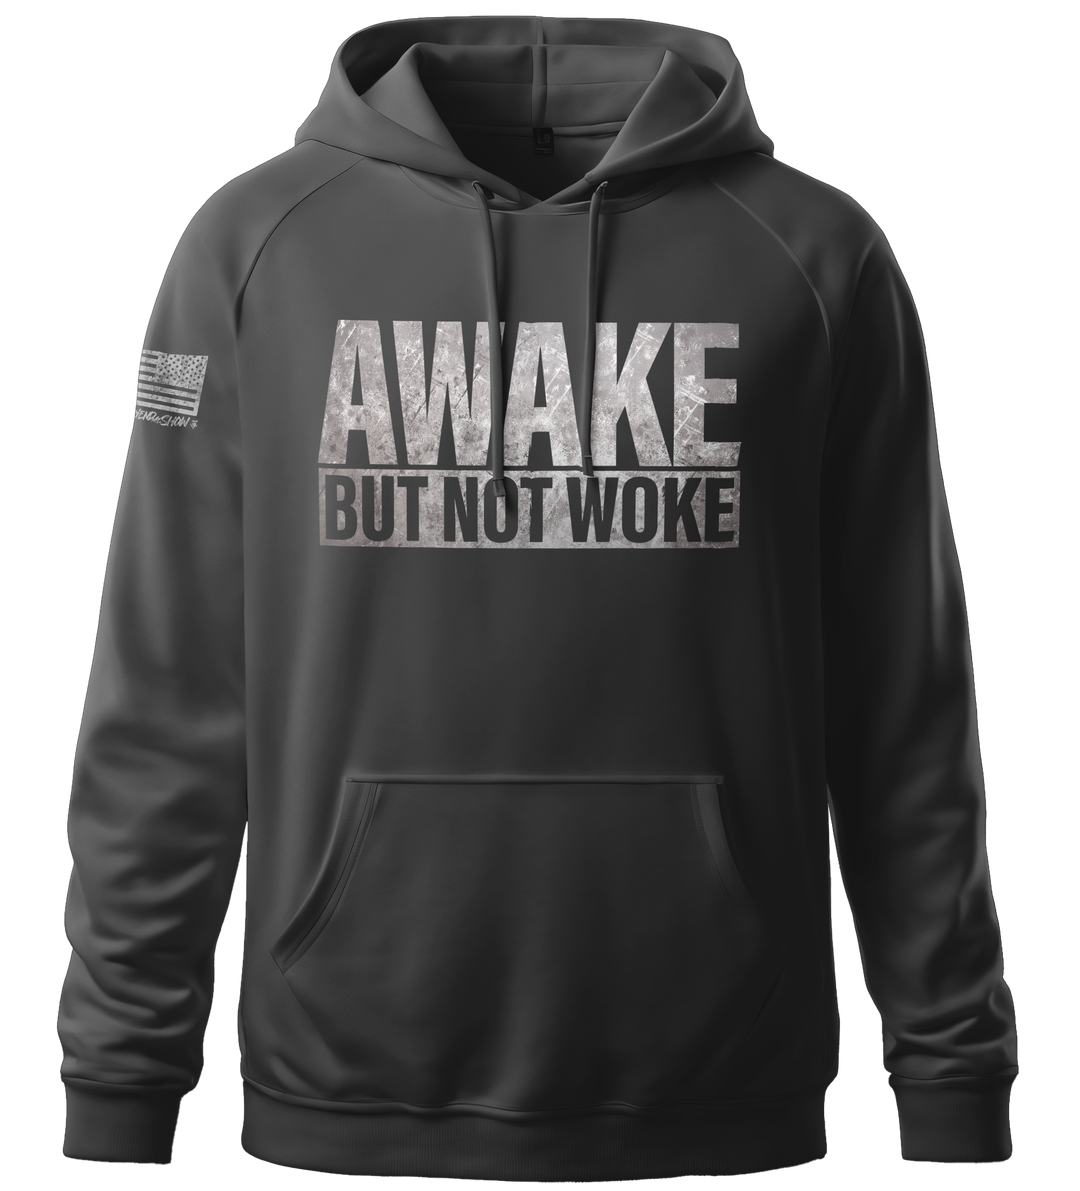 Awake HOODIE (U)